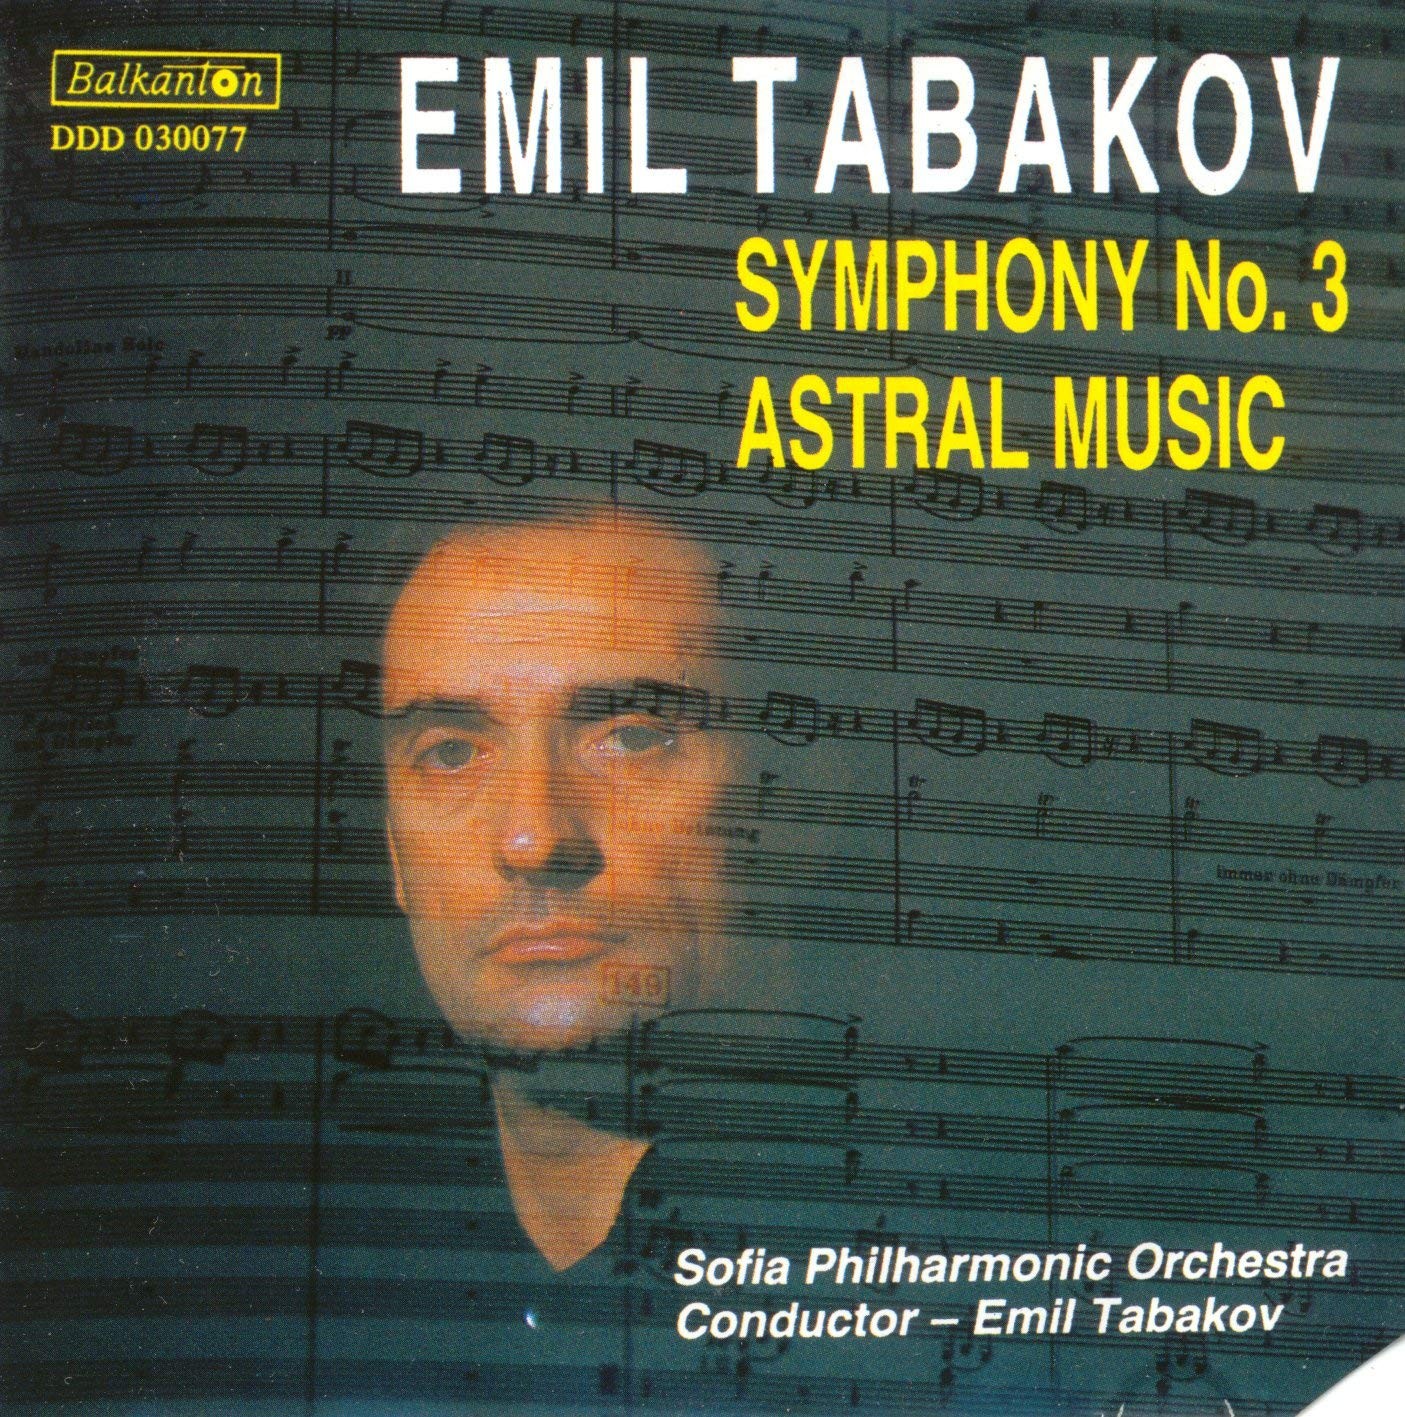 Emil Tabakov. Symphony No. 3 & Astral Music